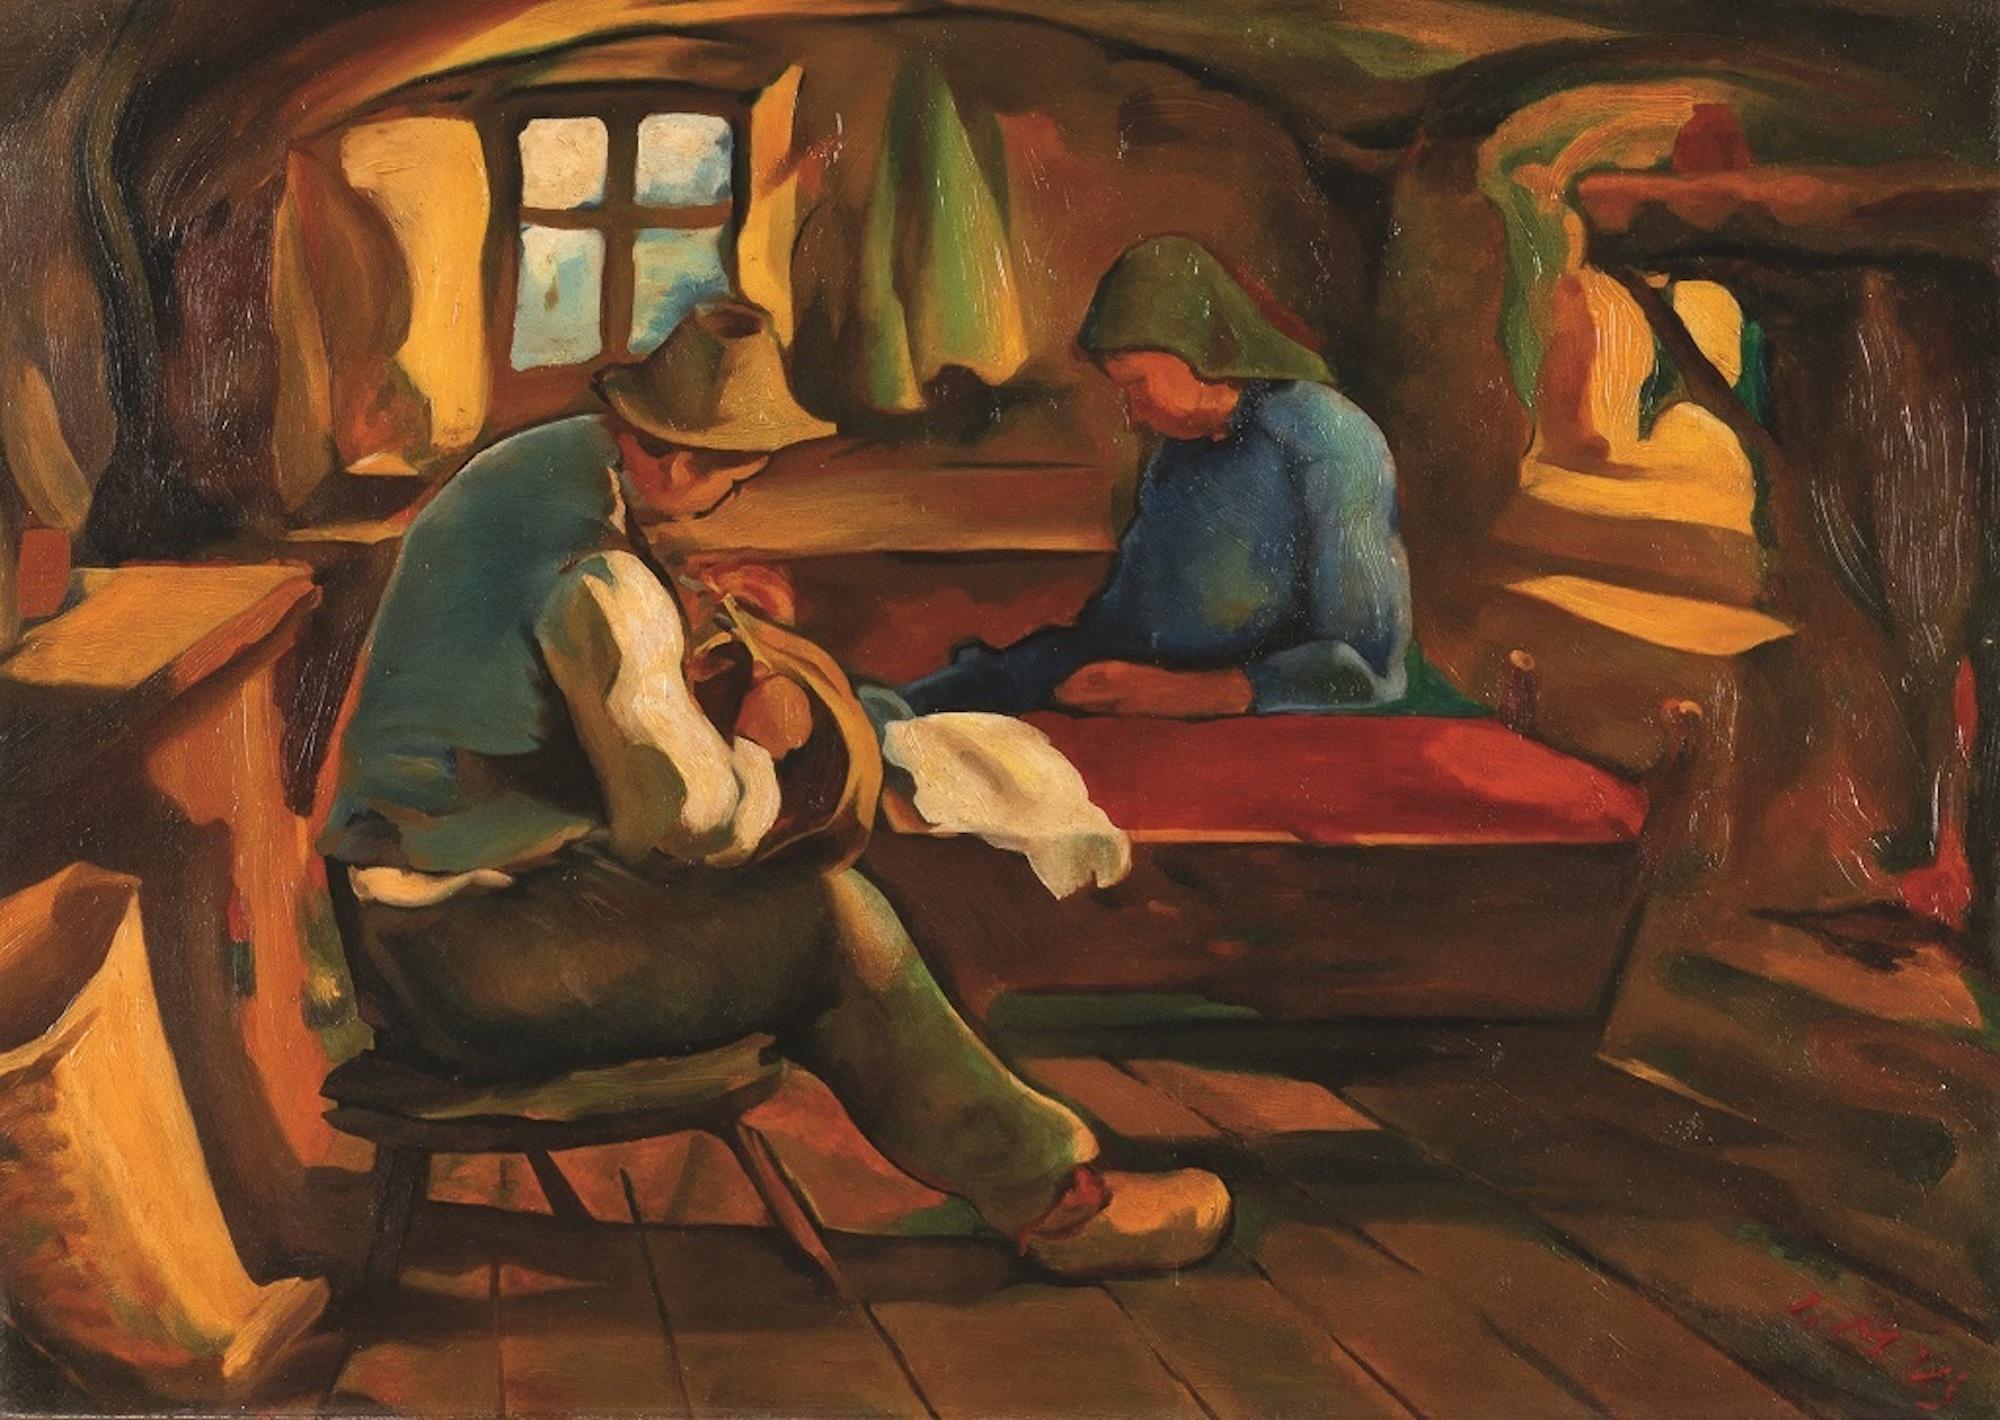 Joseph-Italo Mus Interior Painting - Untitled/Interior Scene - Original Oil on Canvas by J-I Mus - Mid 20th Century